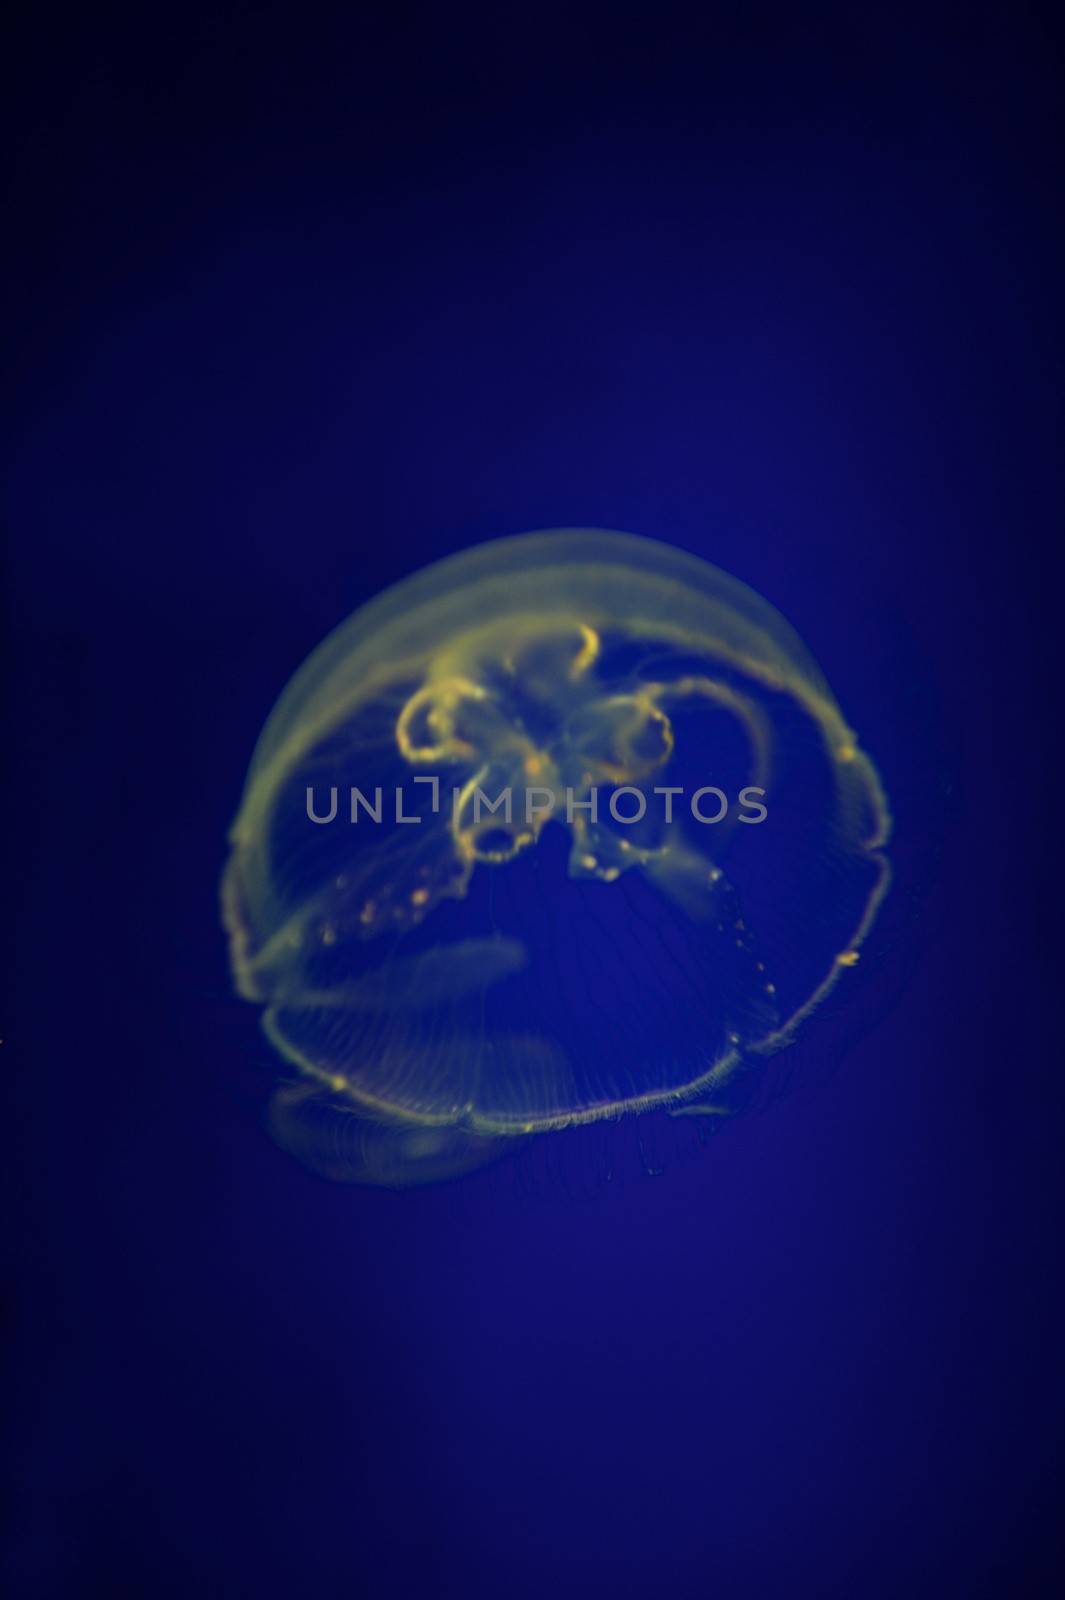 Underwater Aquaium by Kitch